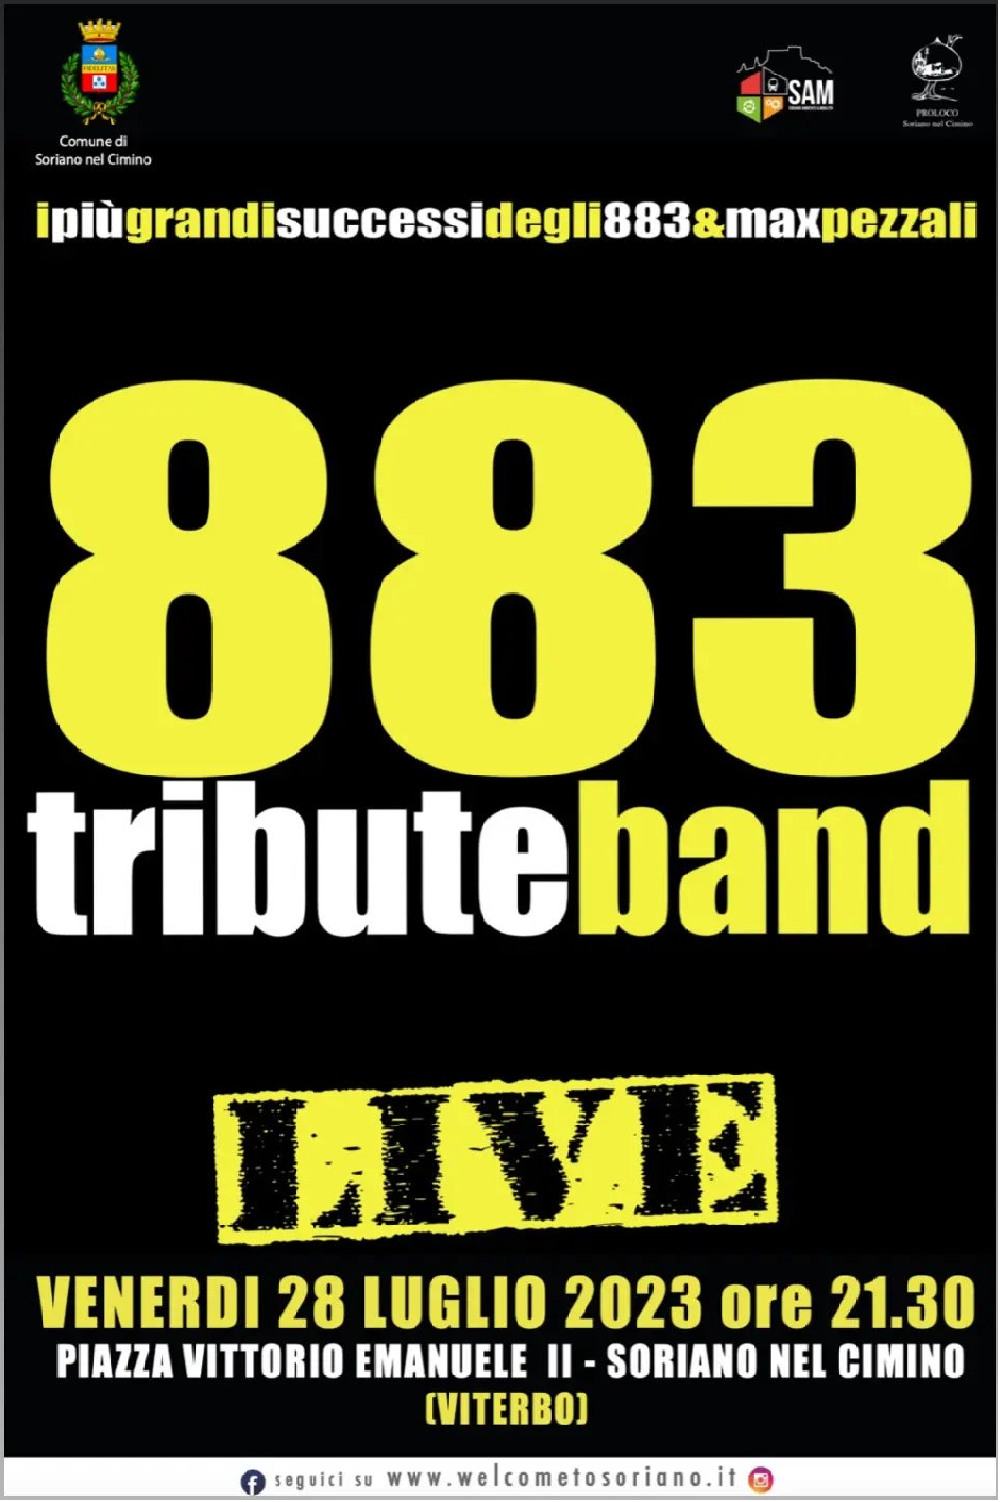 883 tribute band